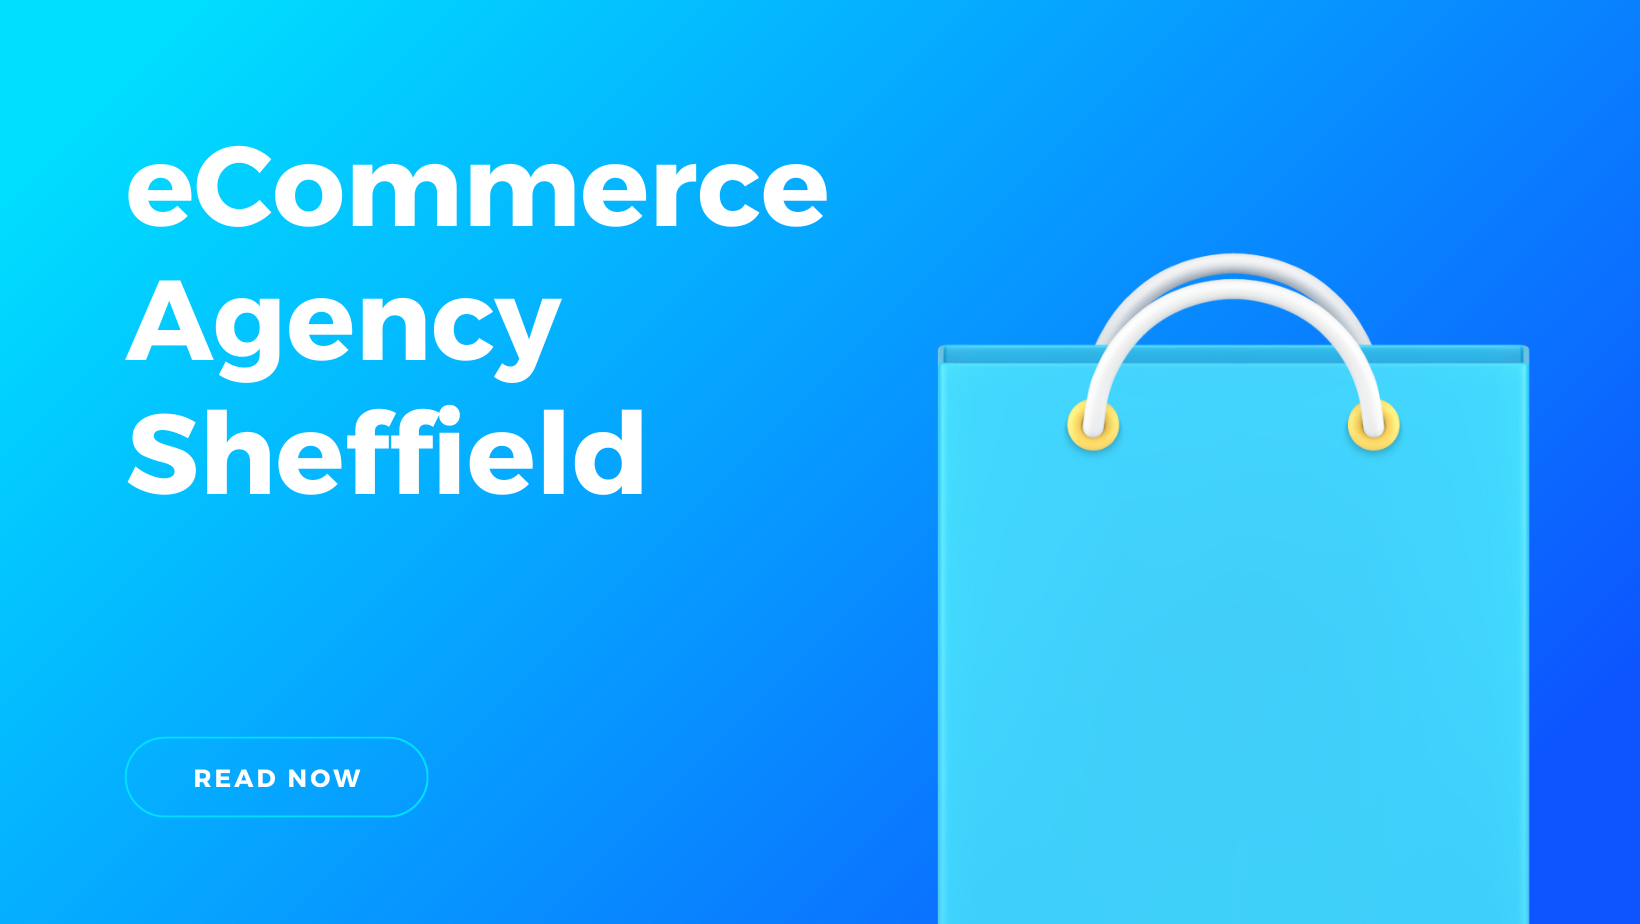 ecommerce agency sheffield